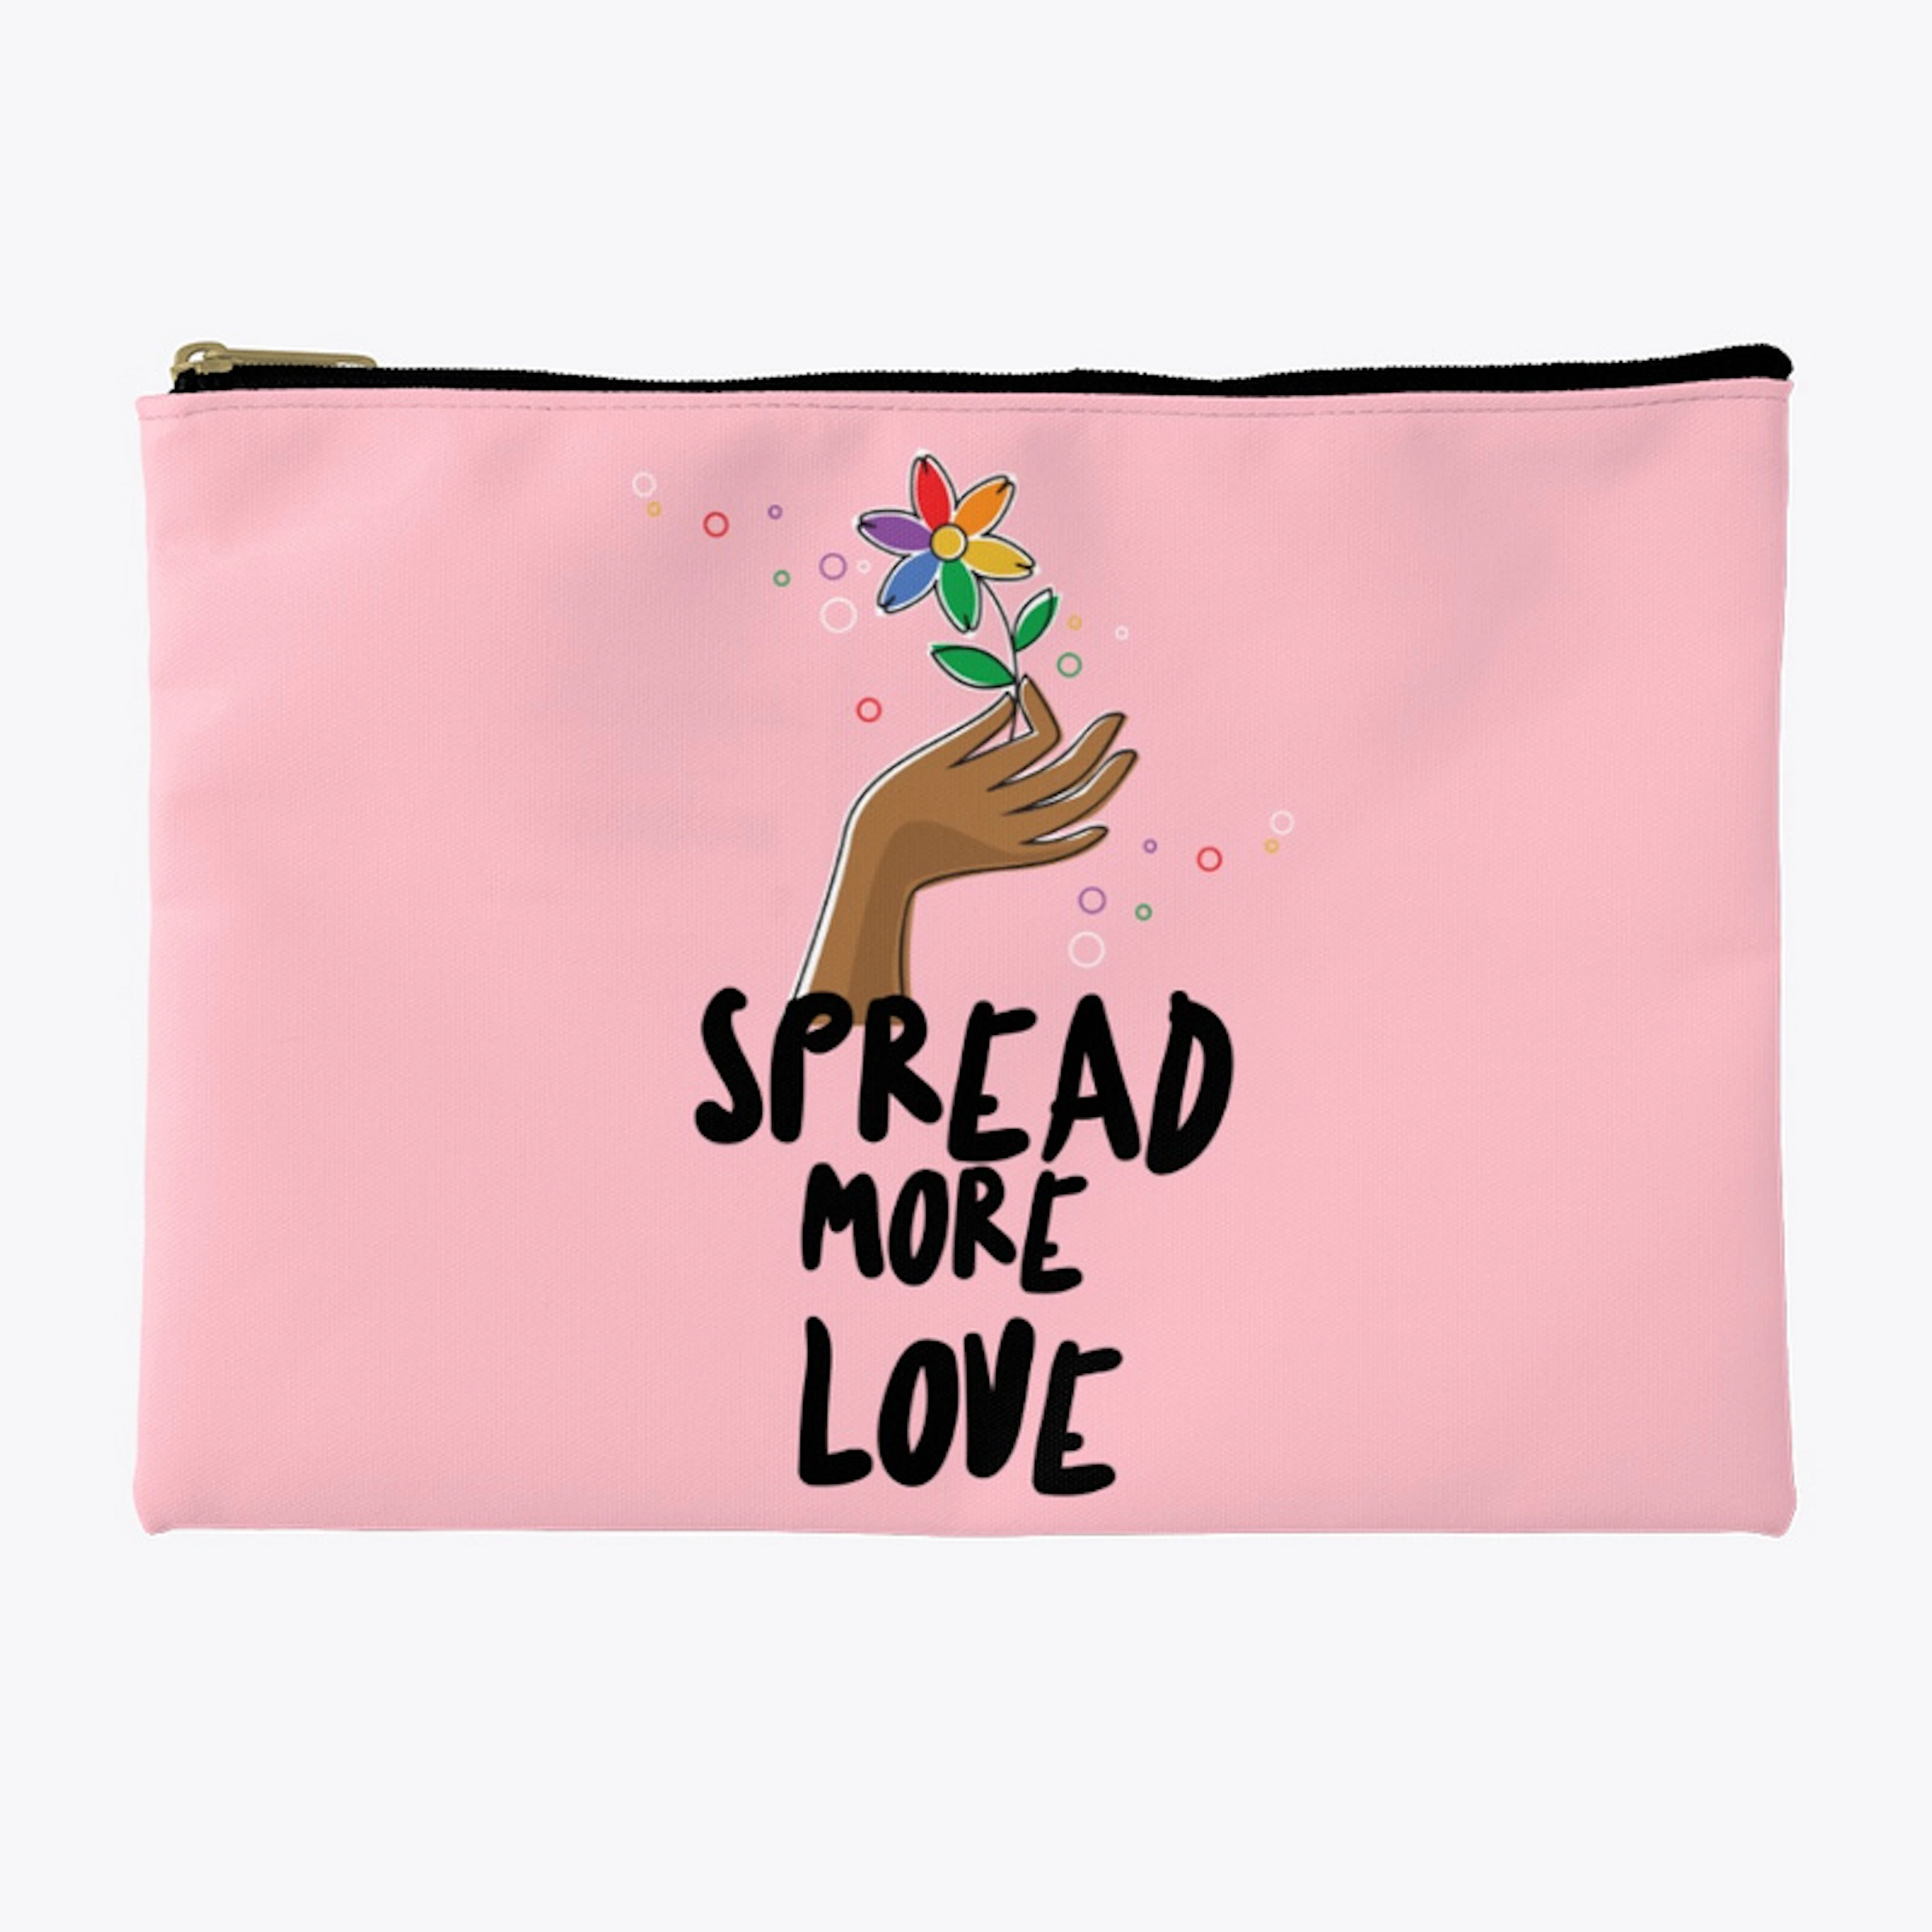 Spread that love everywhere LGBT